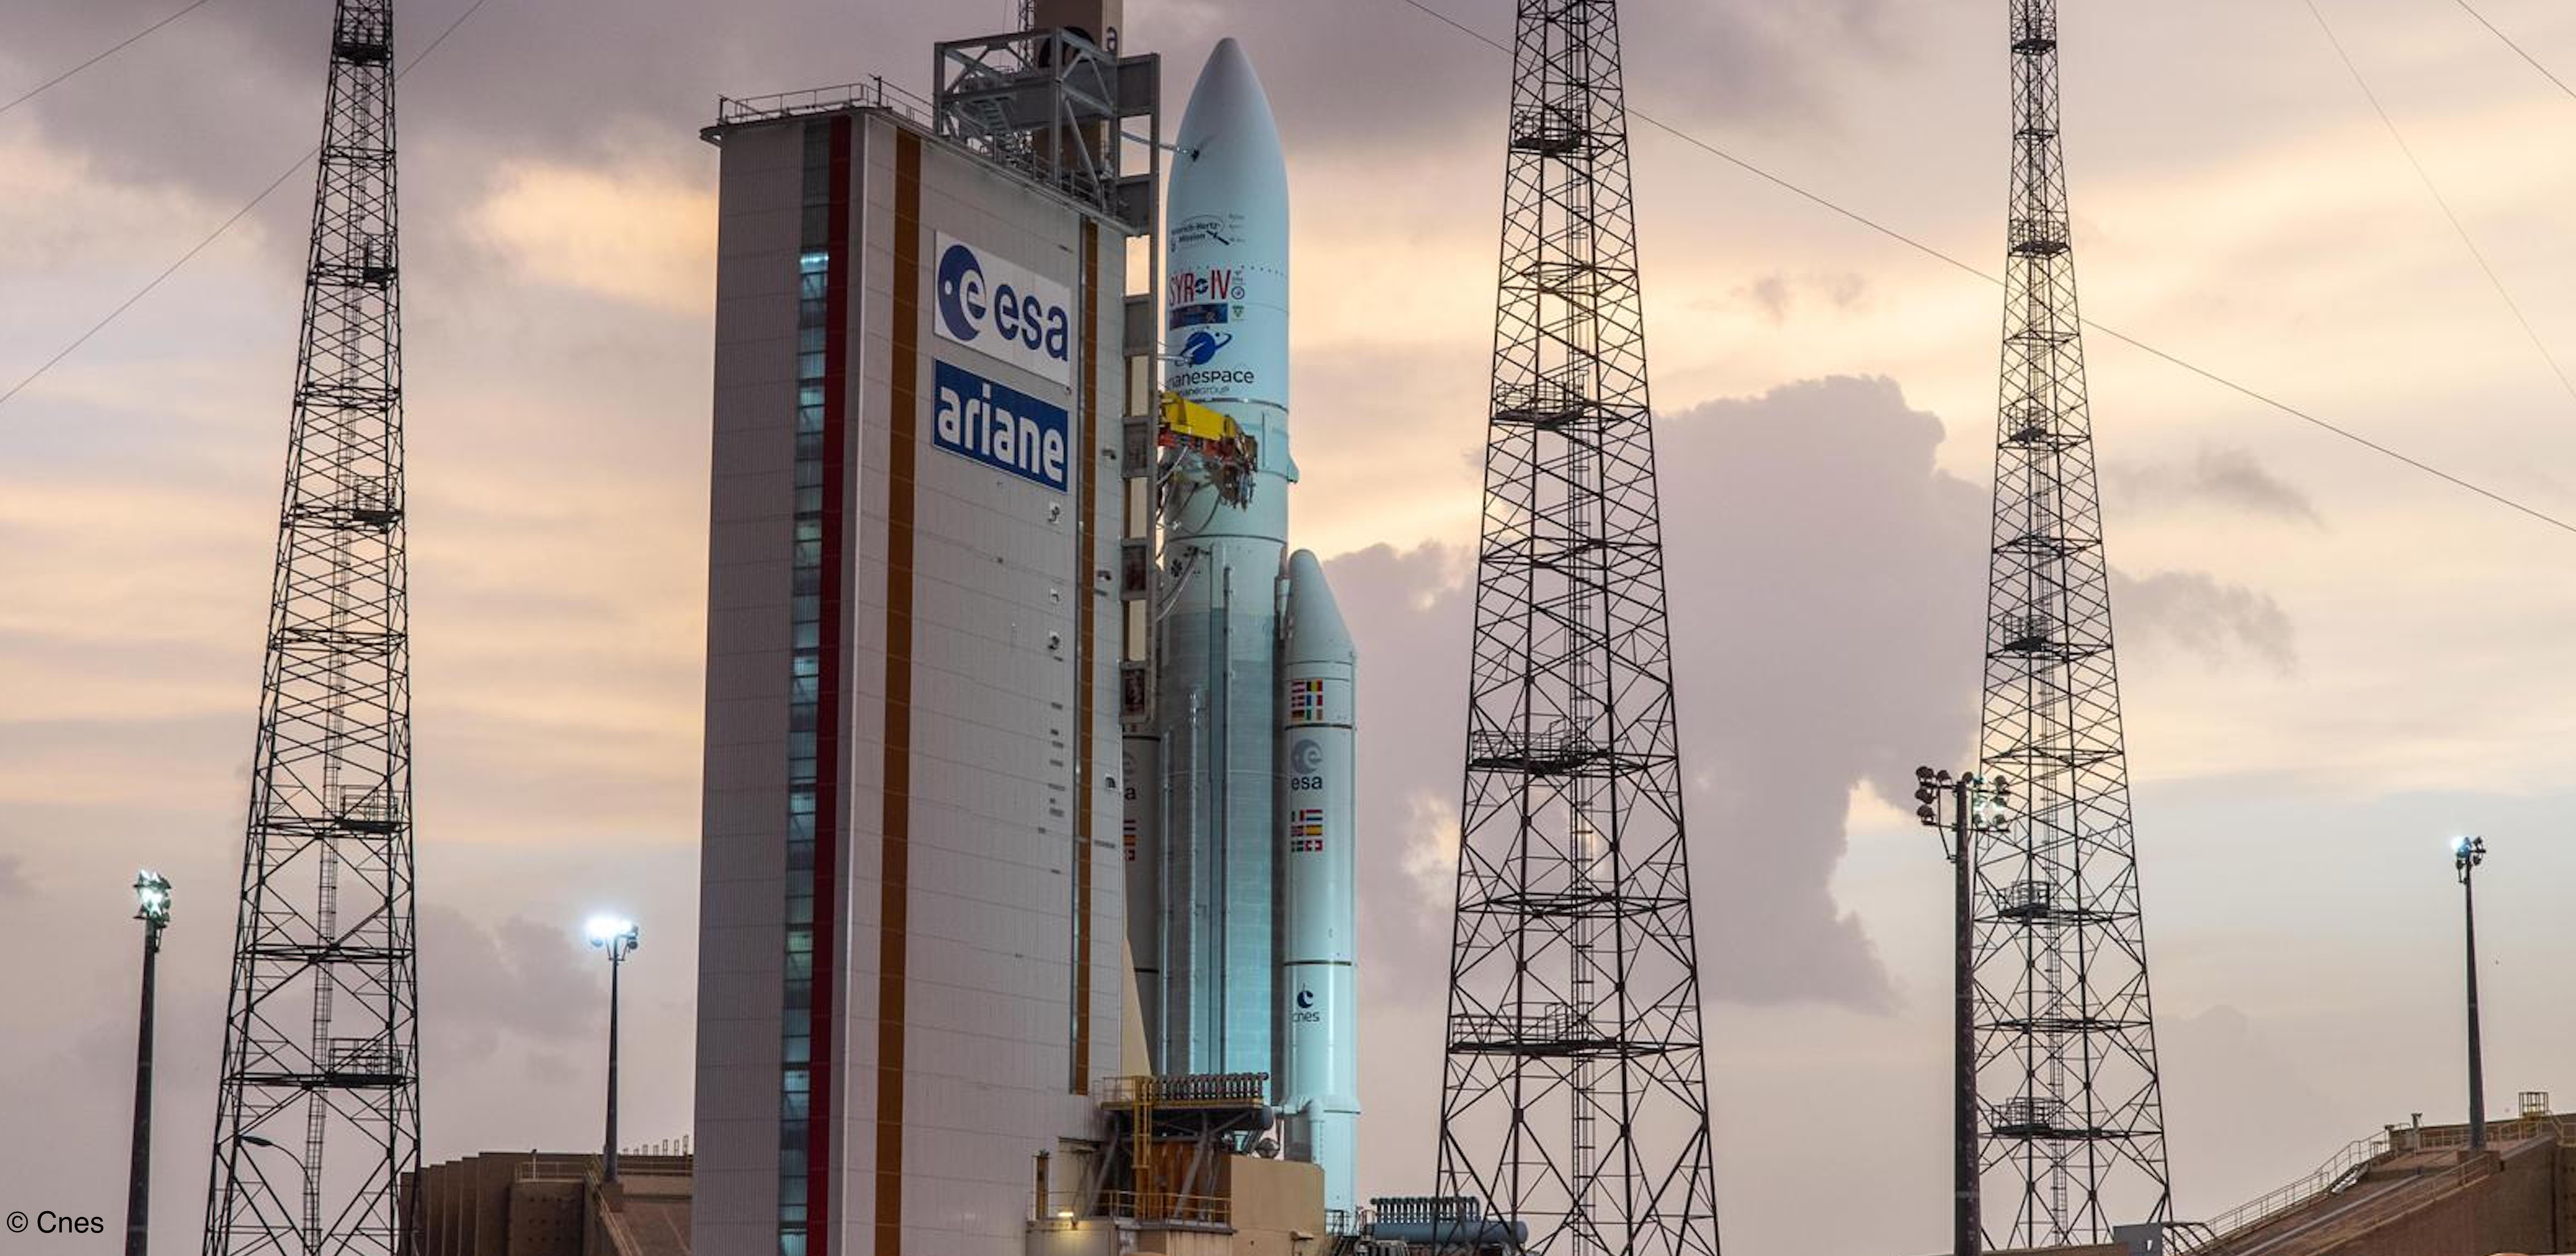 Ariane 5 tire sa révérence après 117 missions